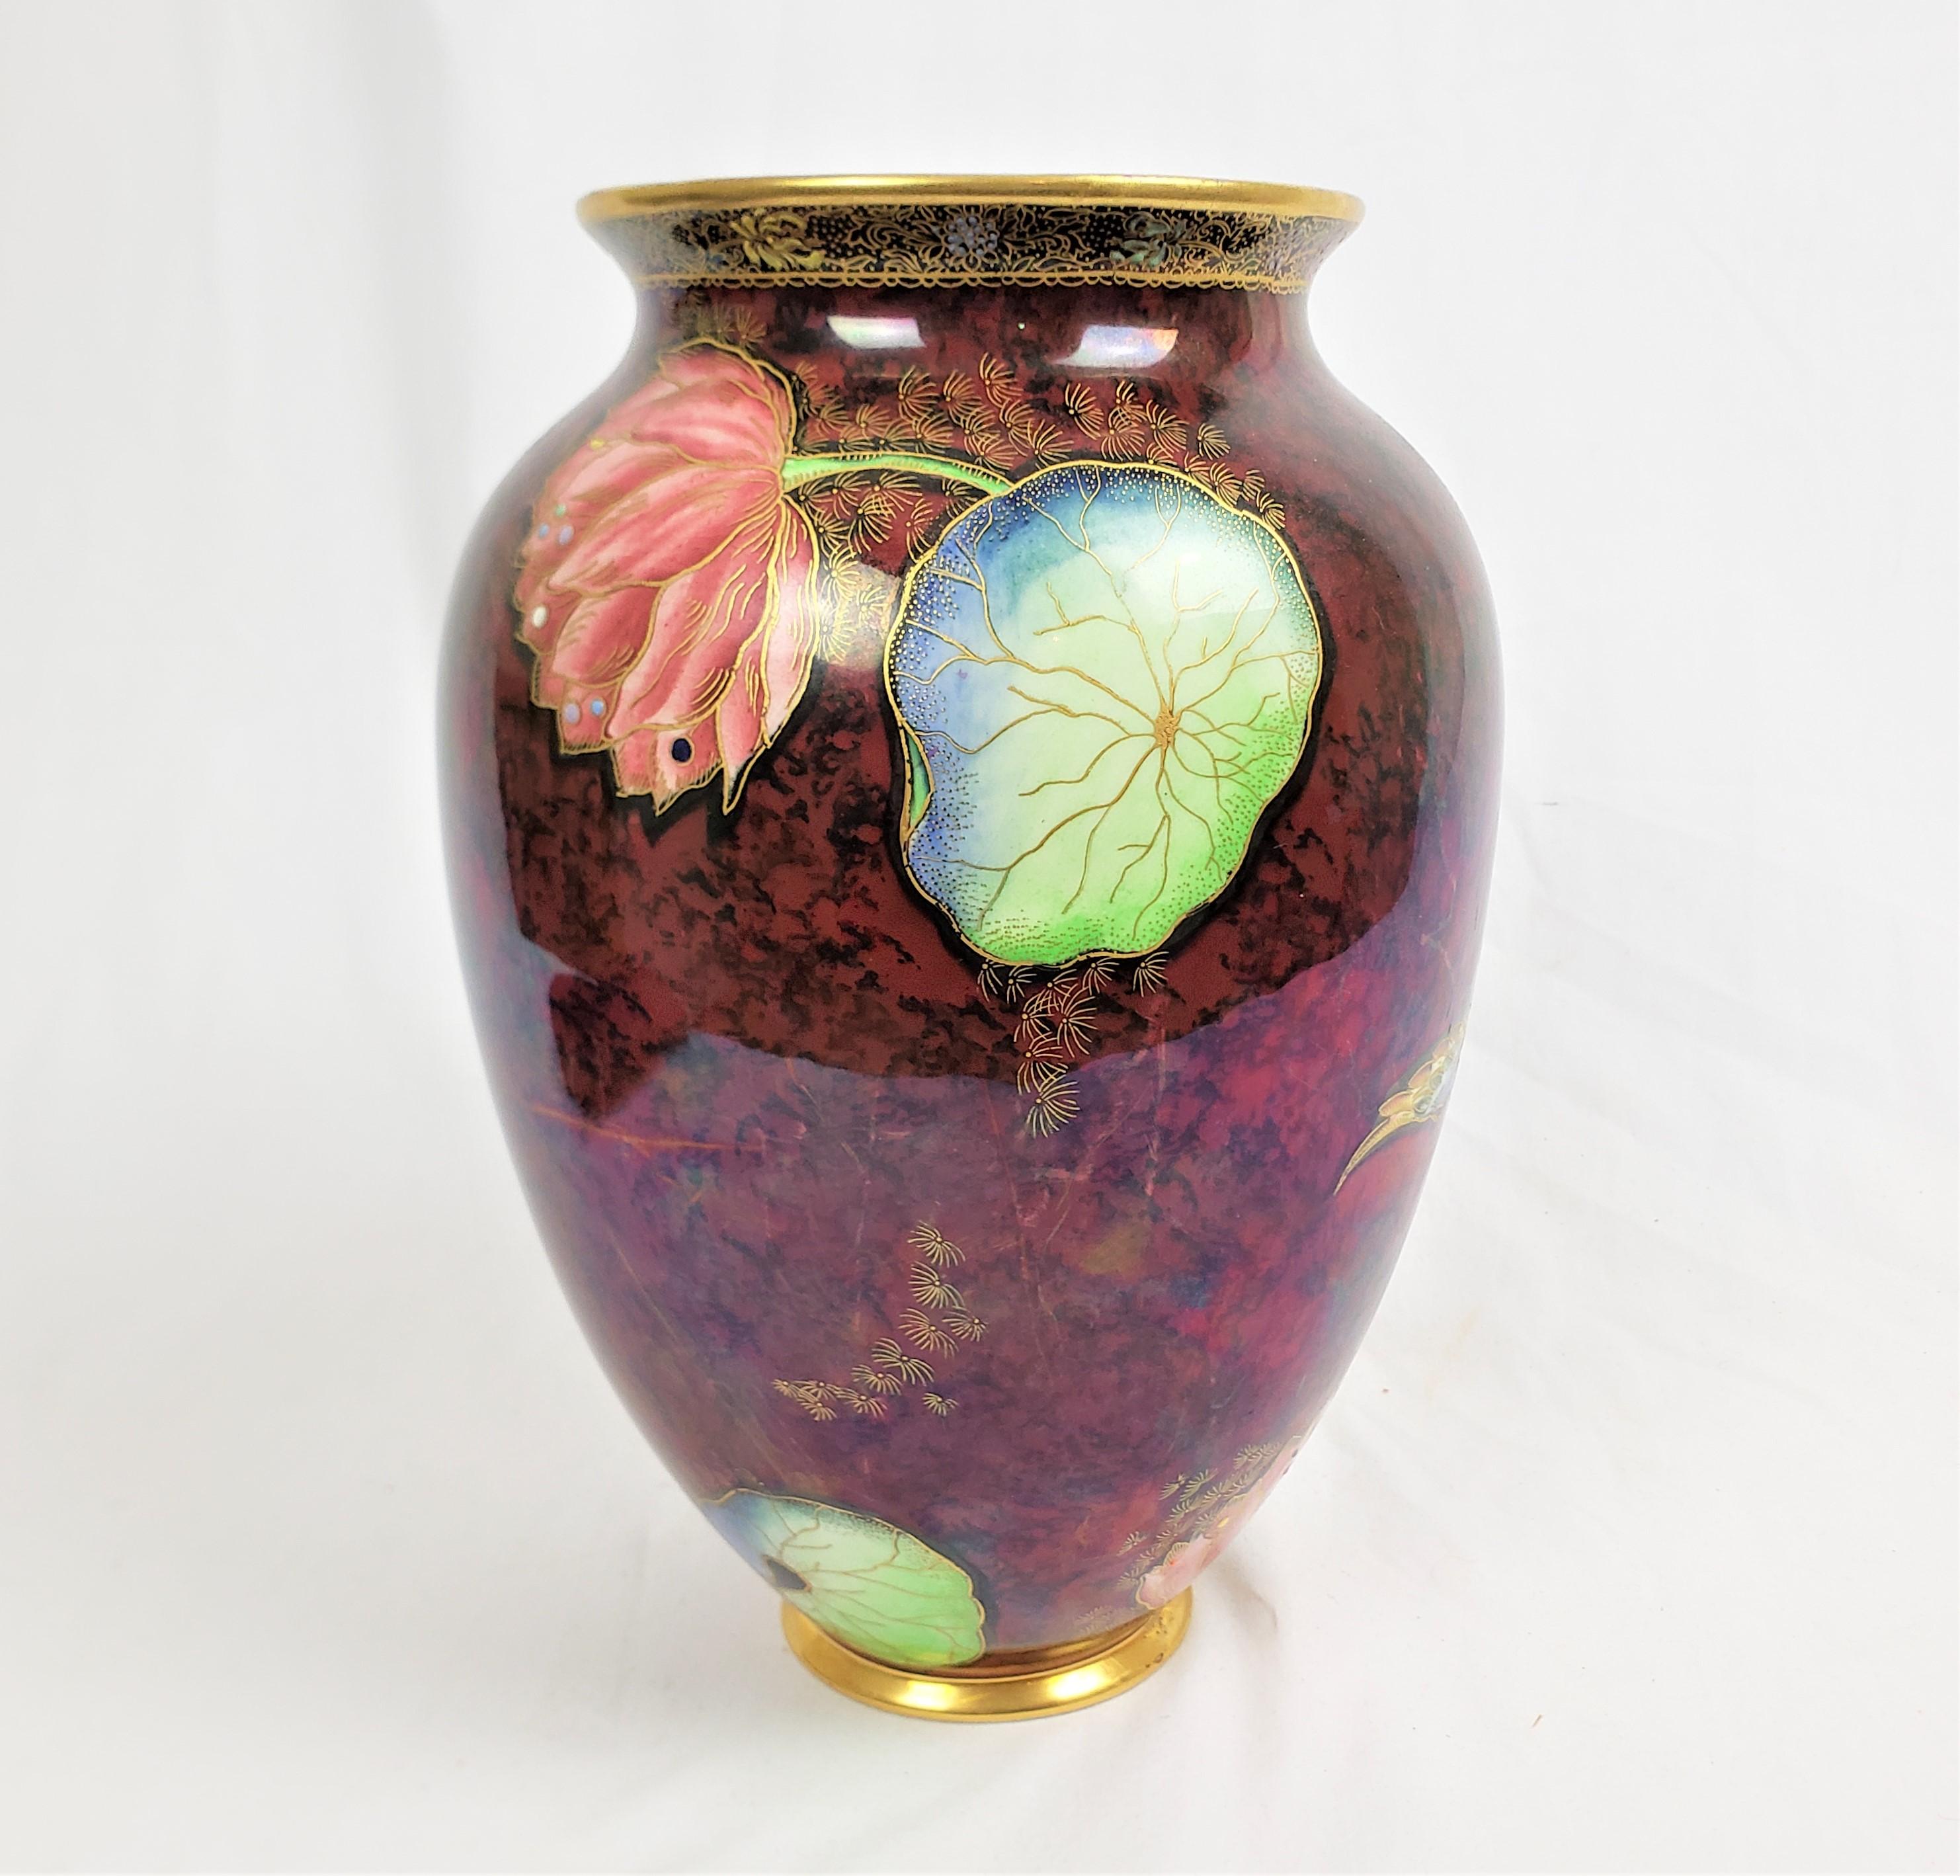 Antique Art Deco Era Carlton Ware Vase with Asian Inspired Decoration 2